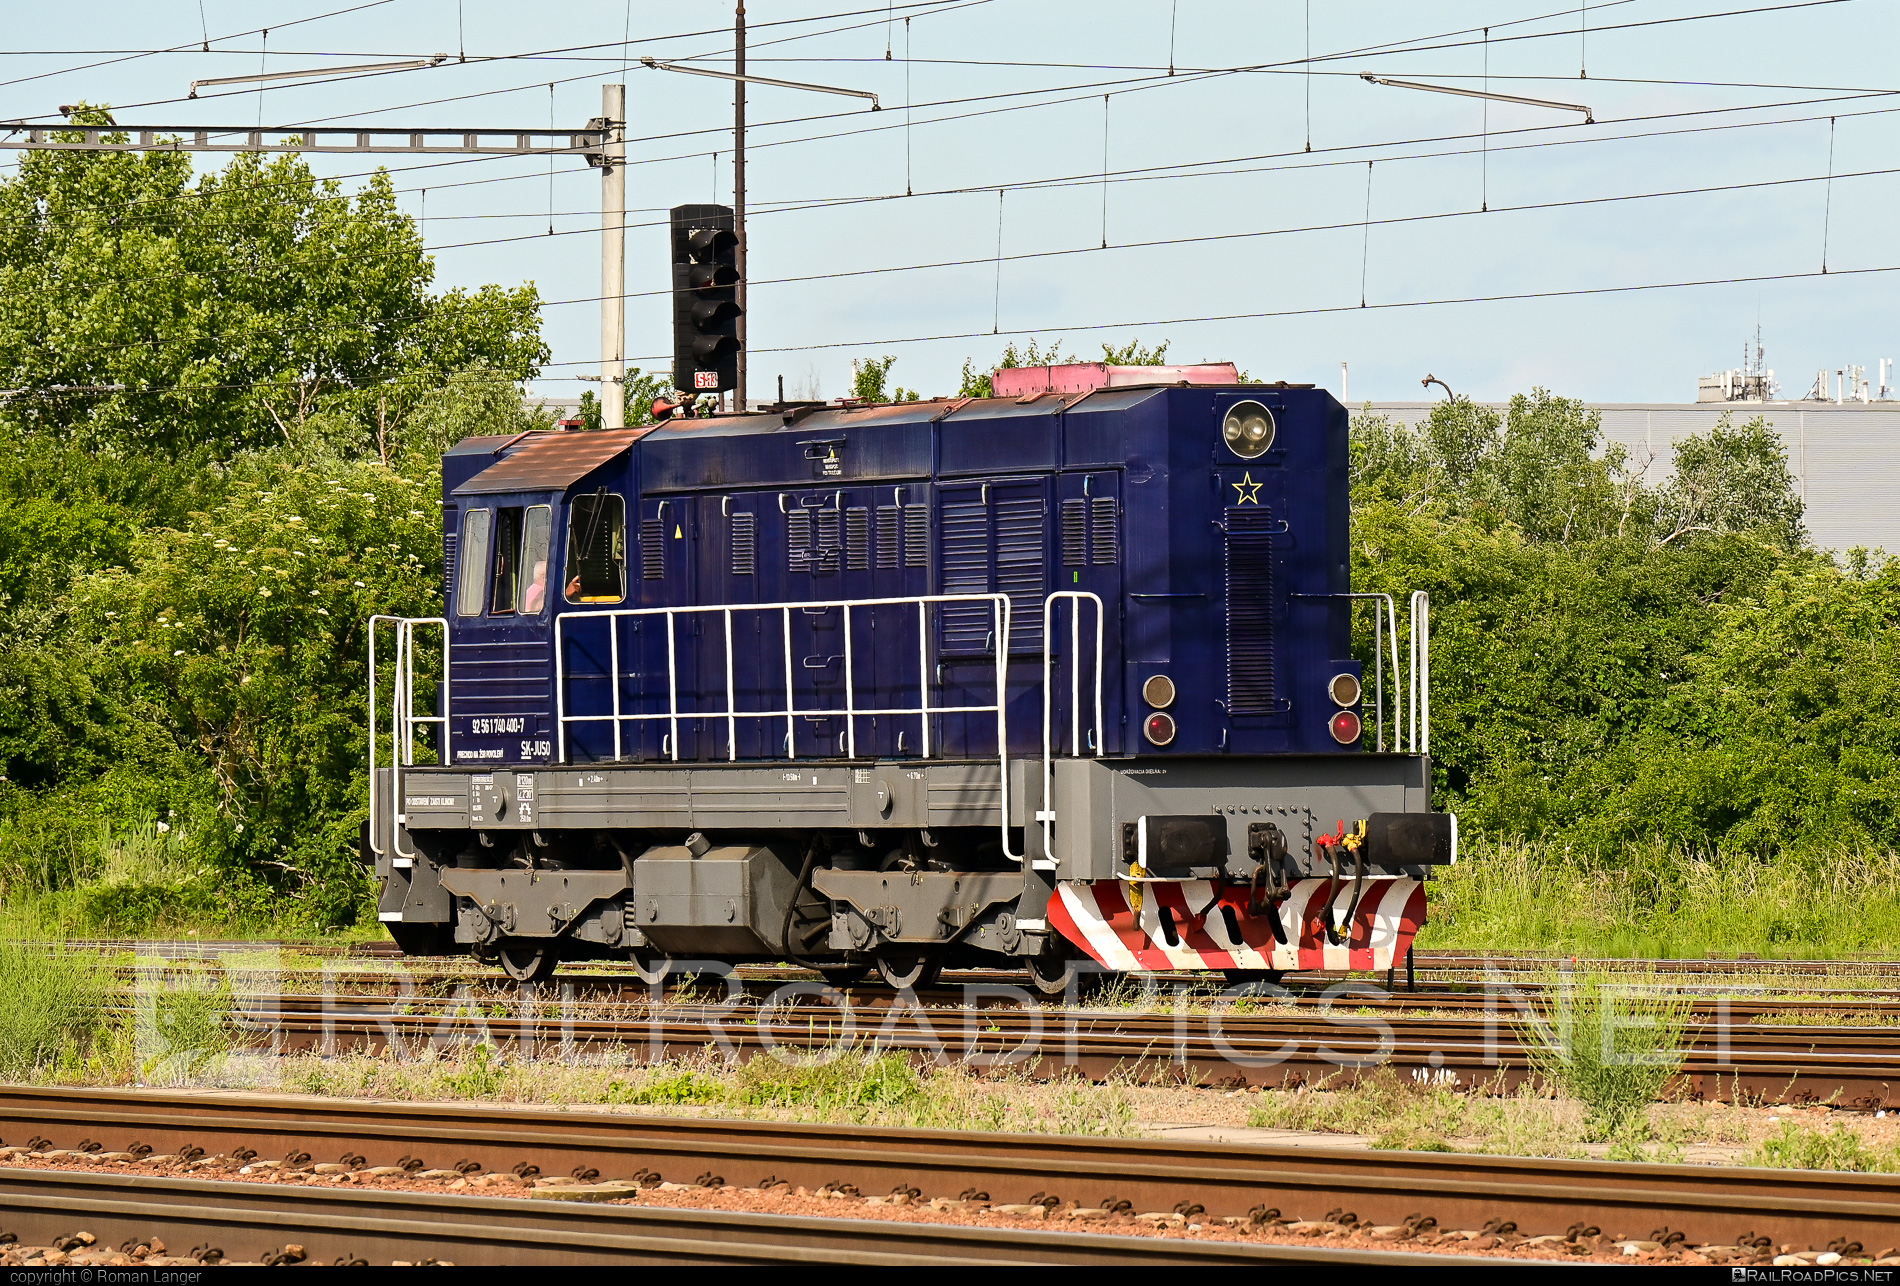 ČKD T 448.0 (740) - 740 400-7 operated by JUSO s.r.o. #ckd #ckd4480 #ckd740 #ckdt4480 #juso #kocur